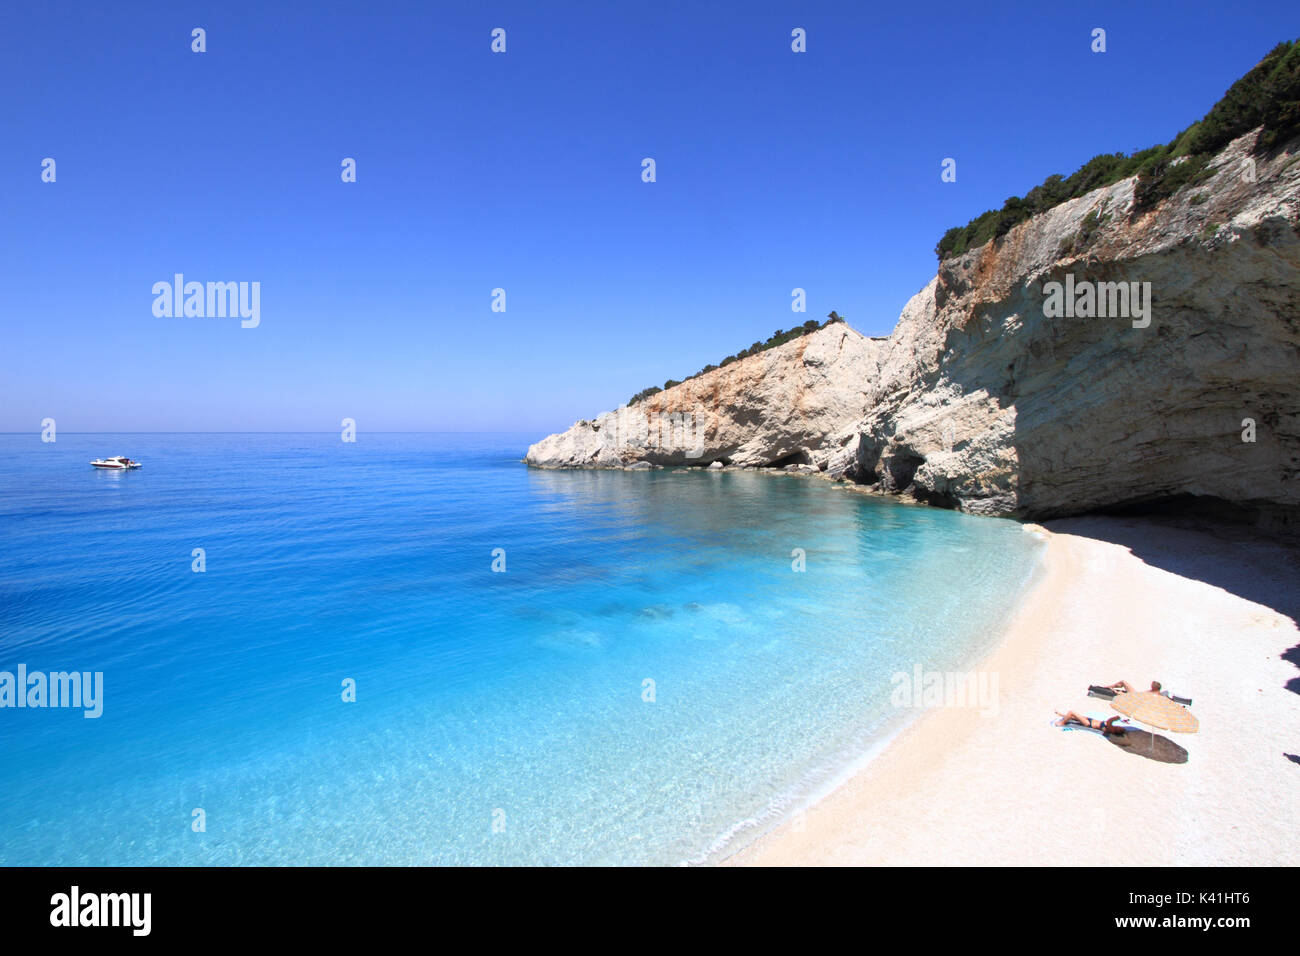 Porto katsiki beach in lefkada, Greece Stock Photo